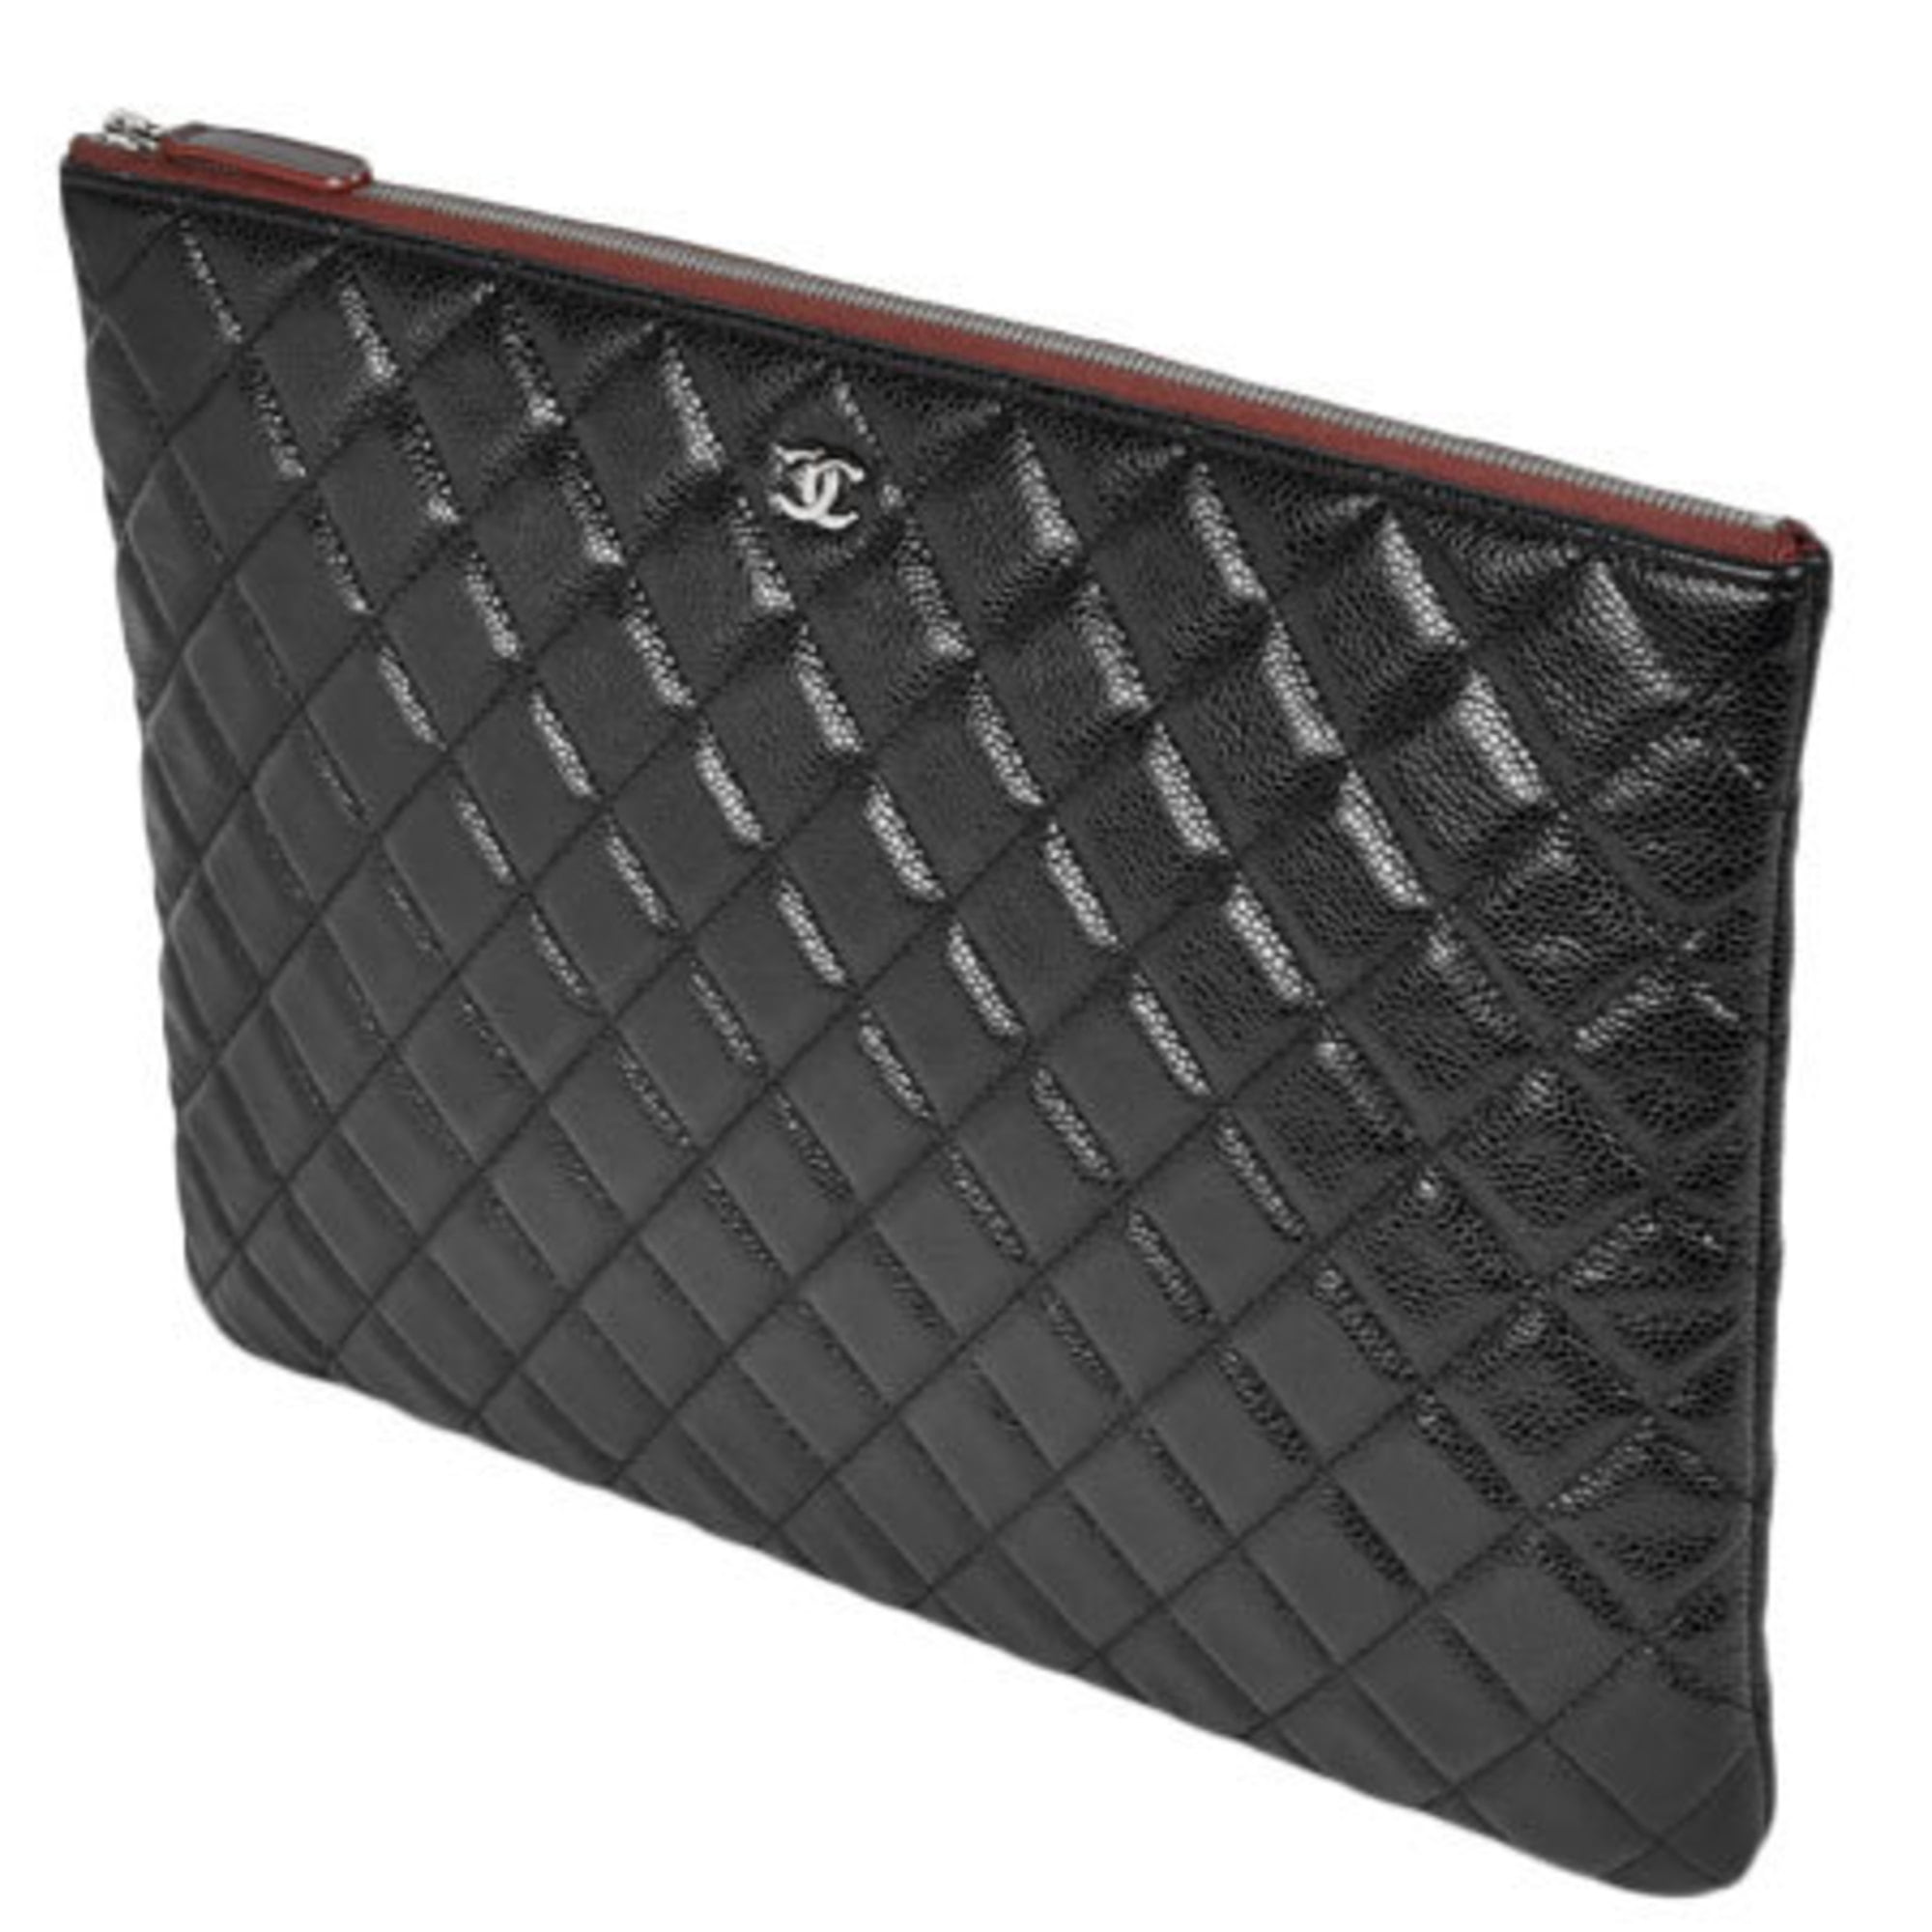 RVM Shop - New✨ Chanel caviar sling bag Size: 8 x 6 x 2